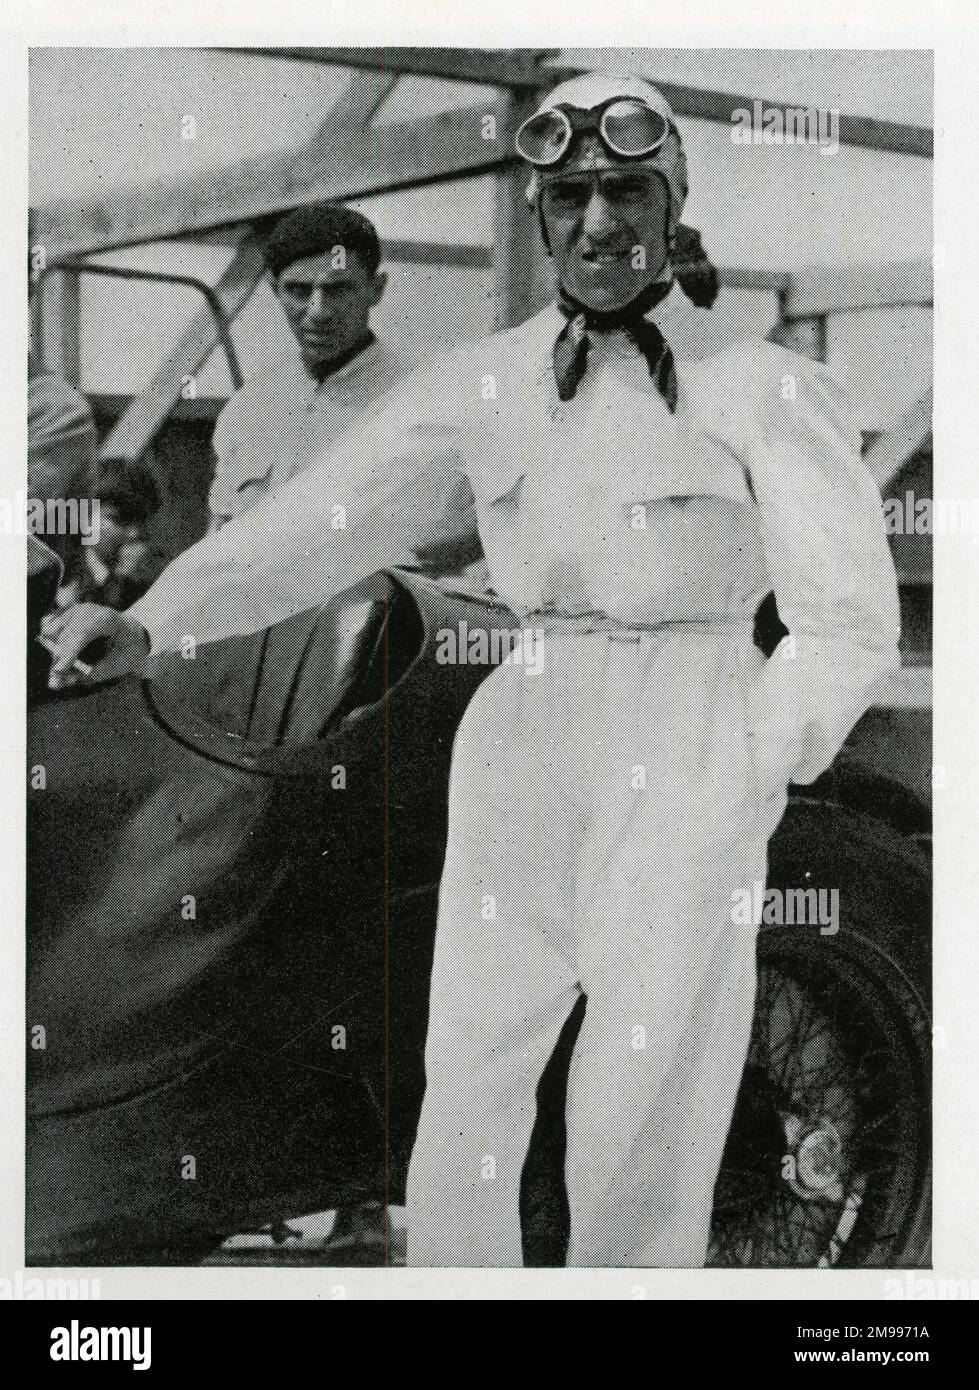 Tazio Nuvolari, motor racing driver. Stock Photo